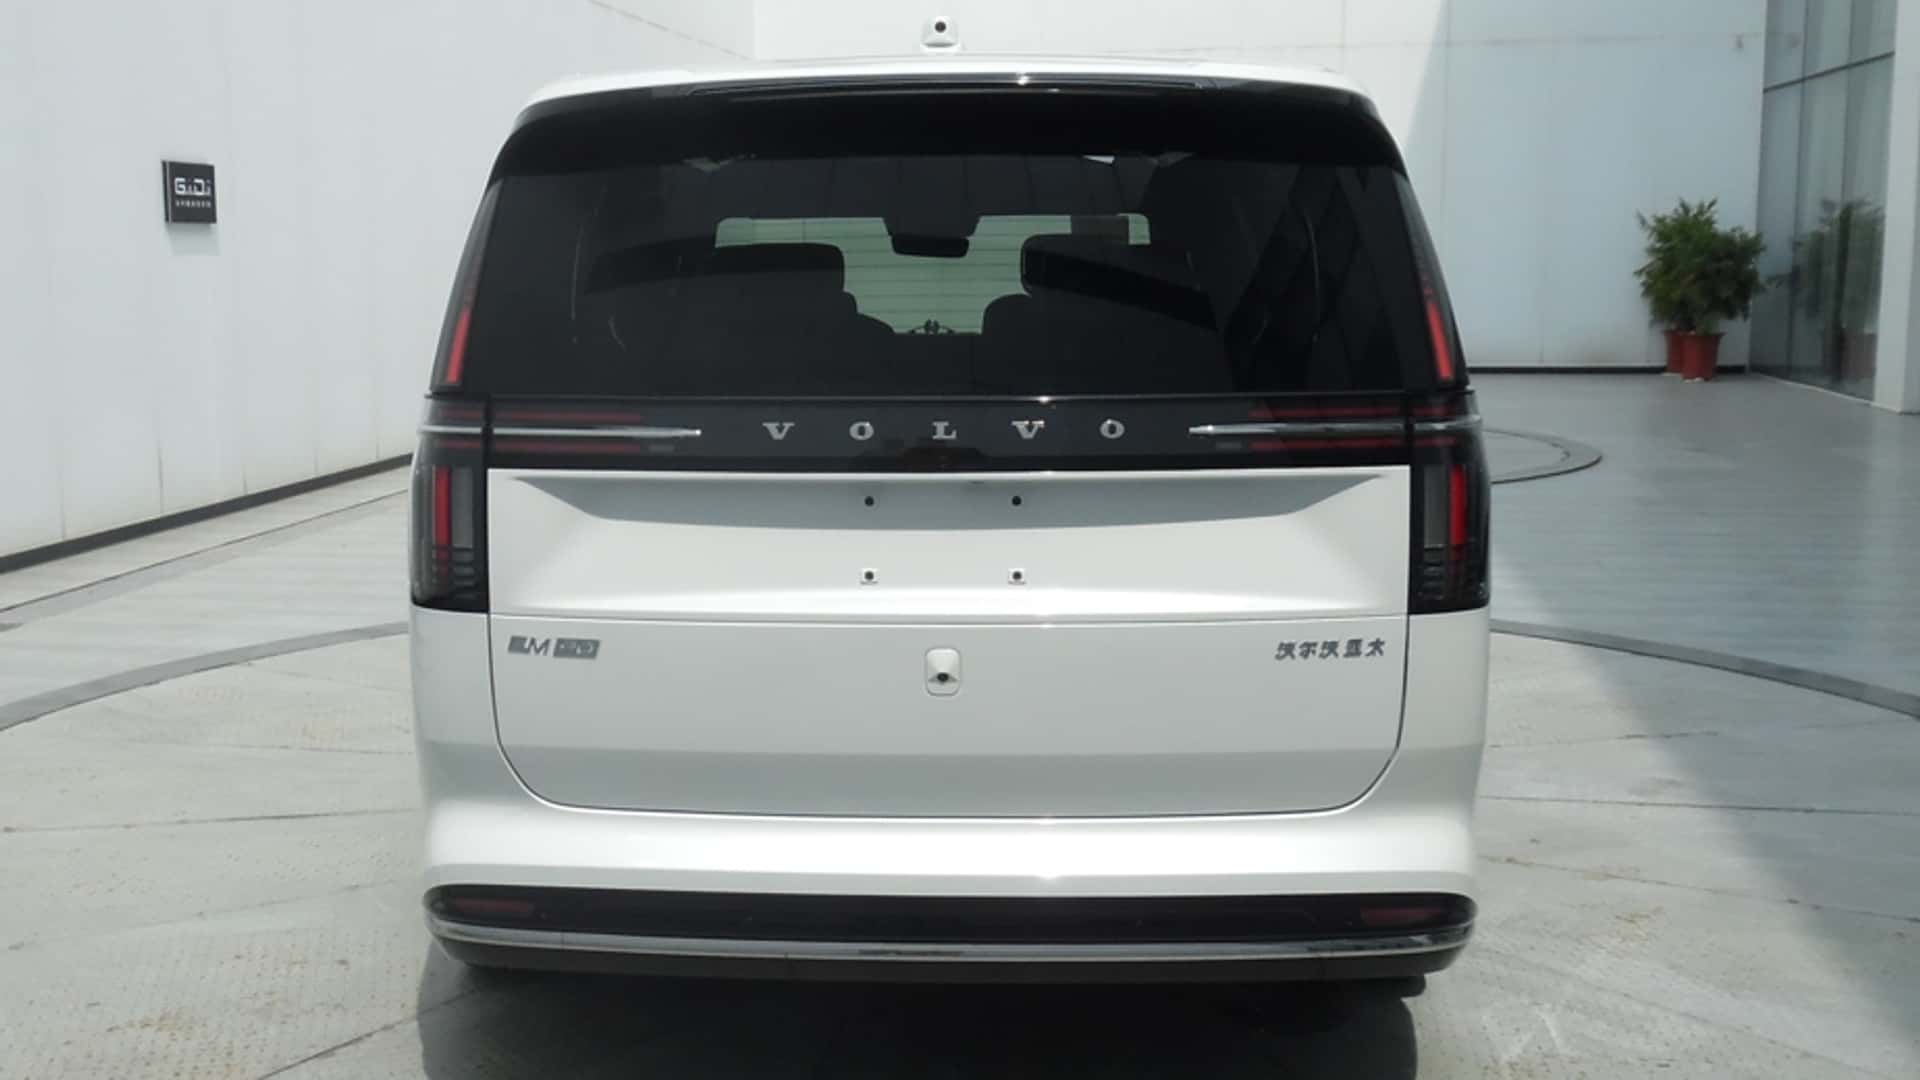 peek inside the volvo em90 minivan, the “scandinavian living room” on wheels